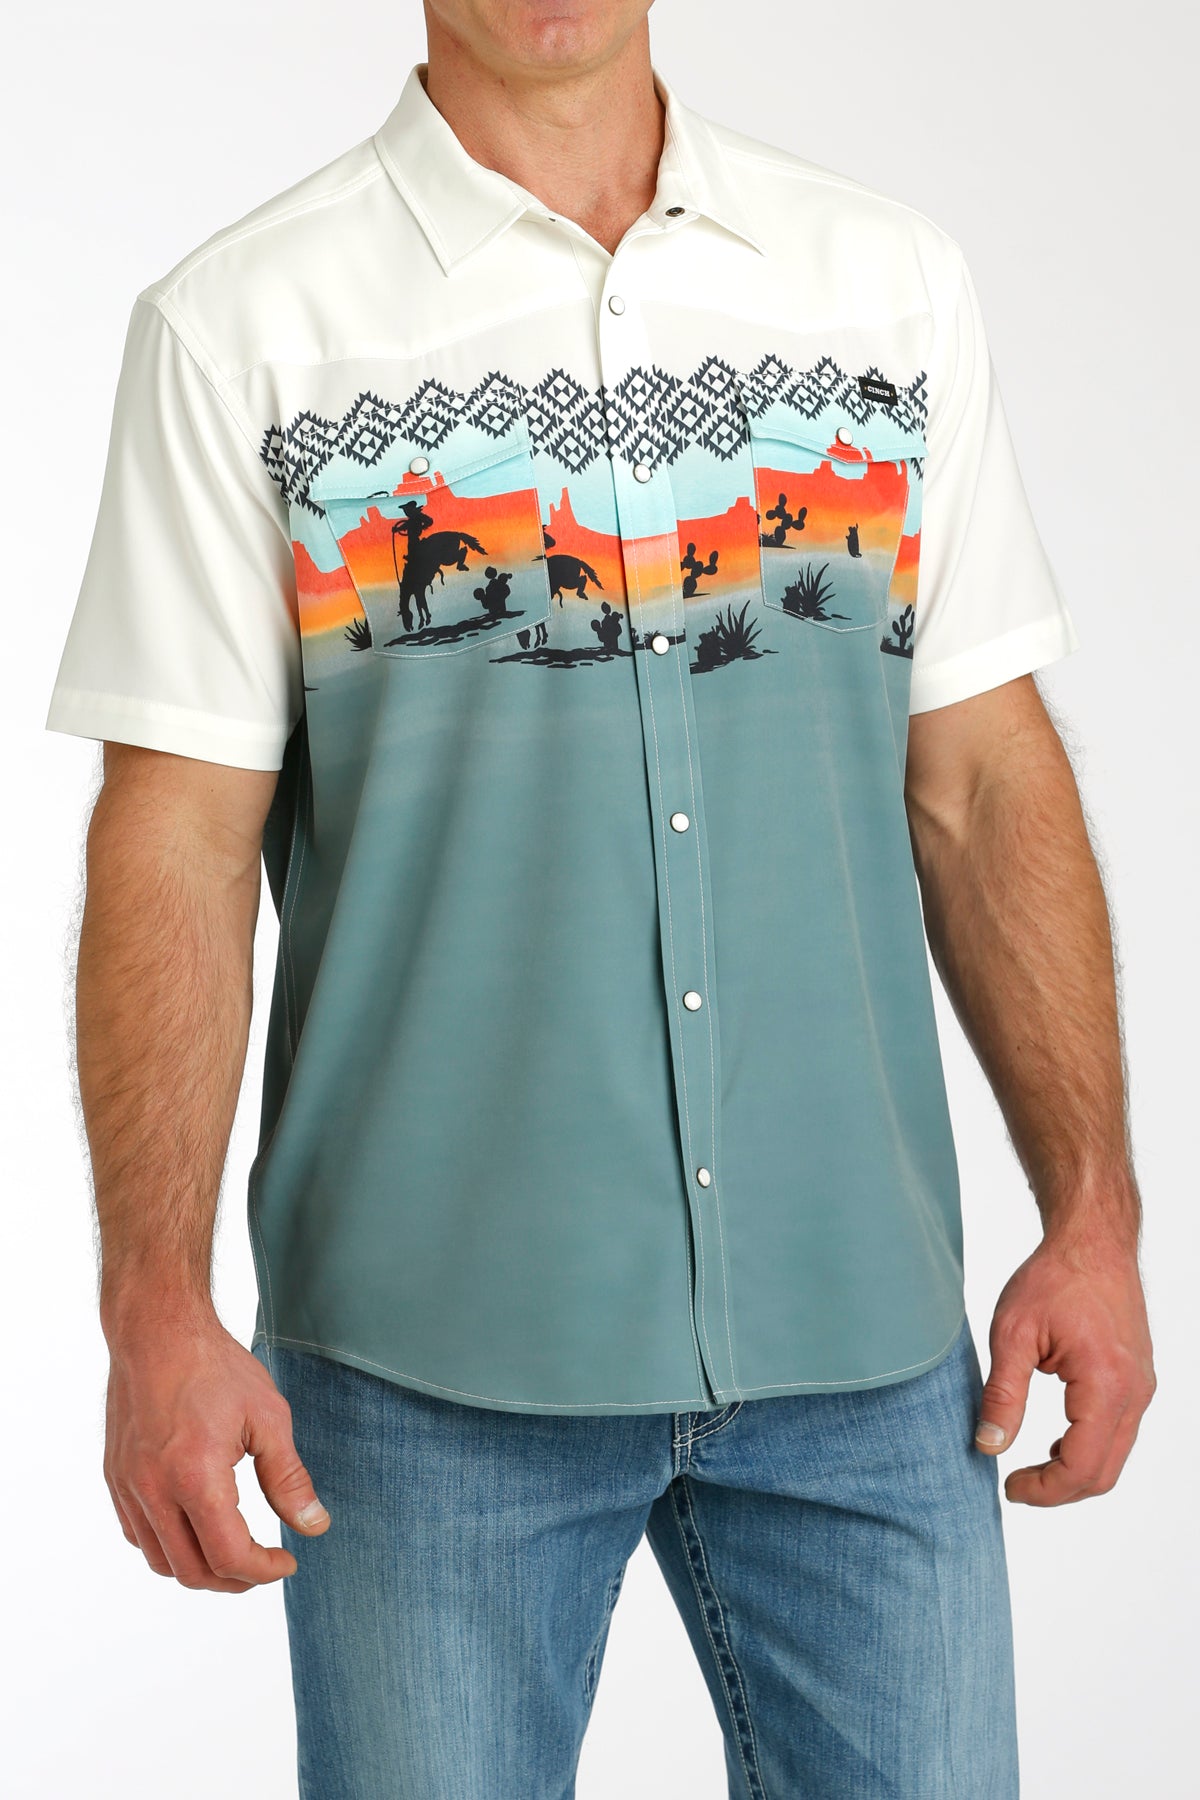 Cinch Men's Southwest Desert Rider Short Sleeve Camp Shirt in Blue & Cream